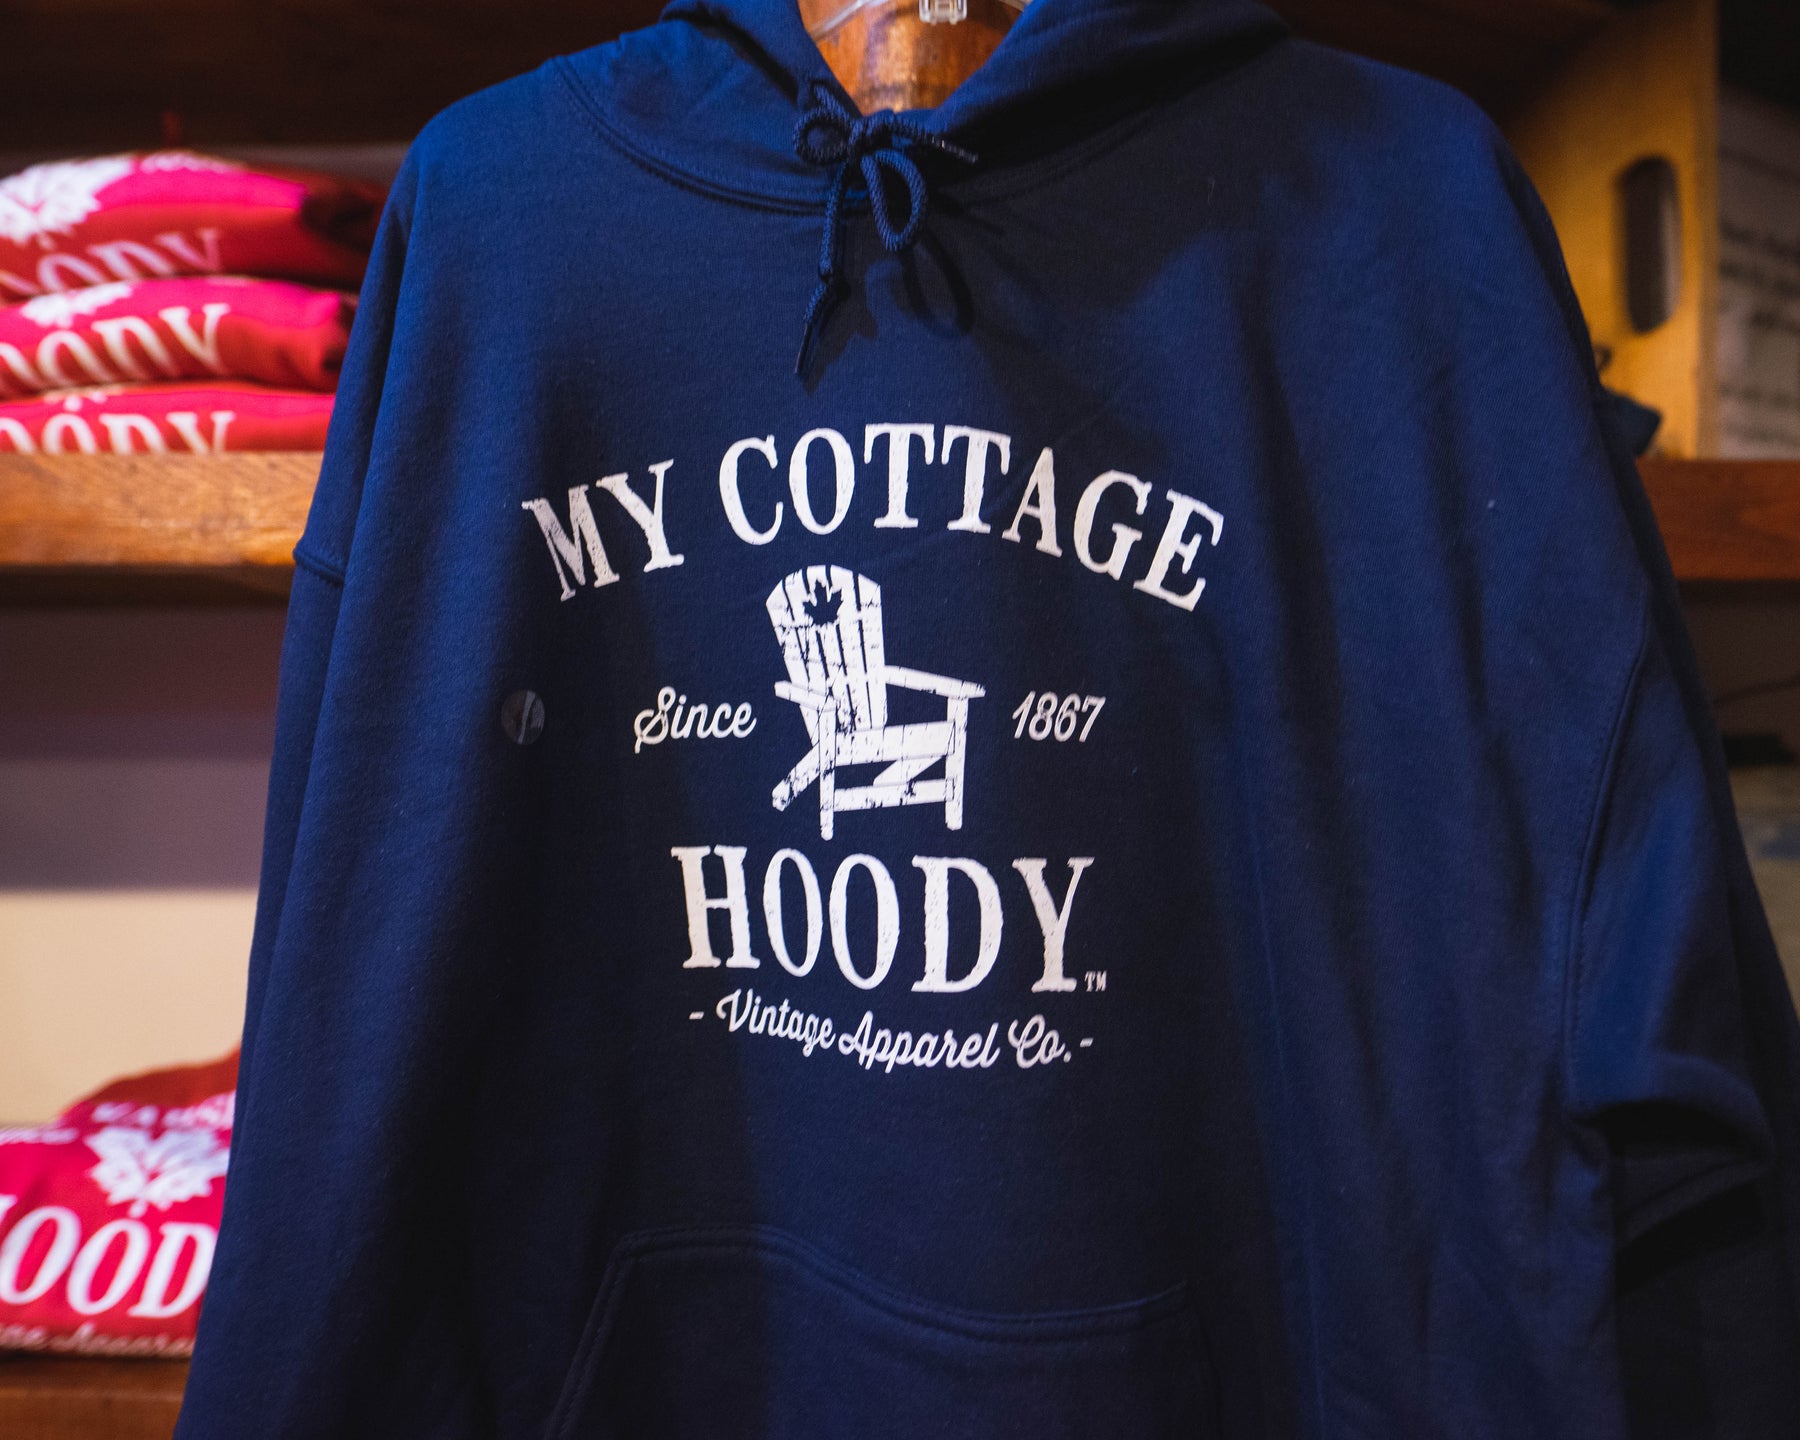 My Cottage Hoody – The Muskoka Store